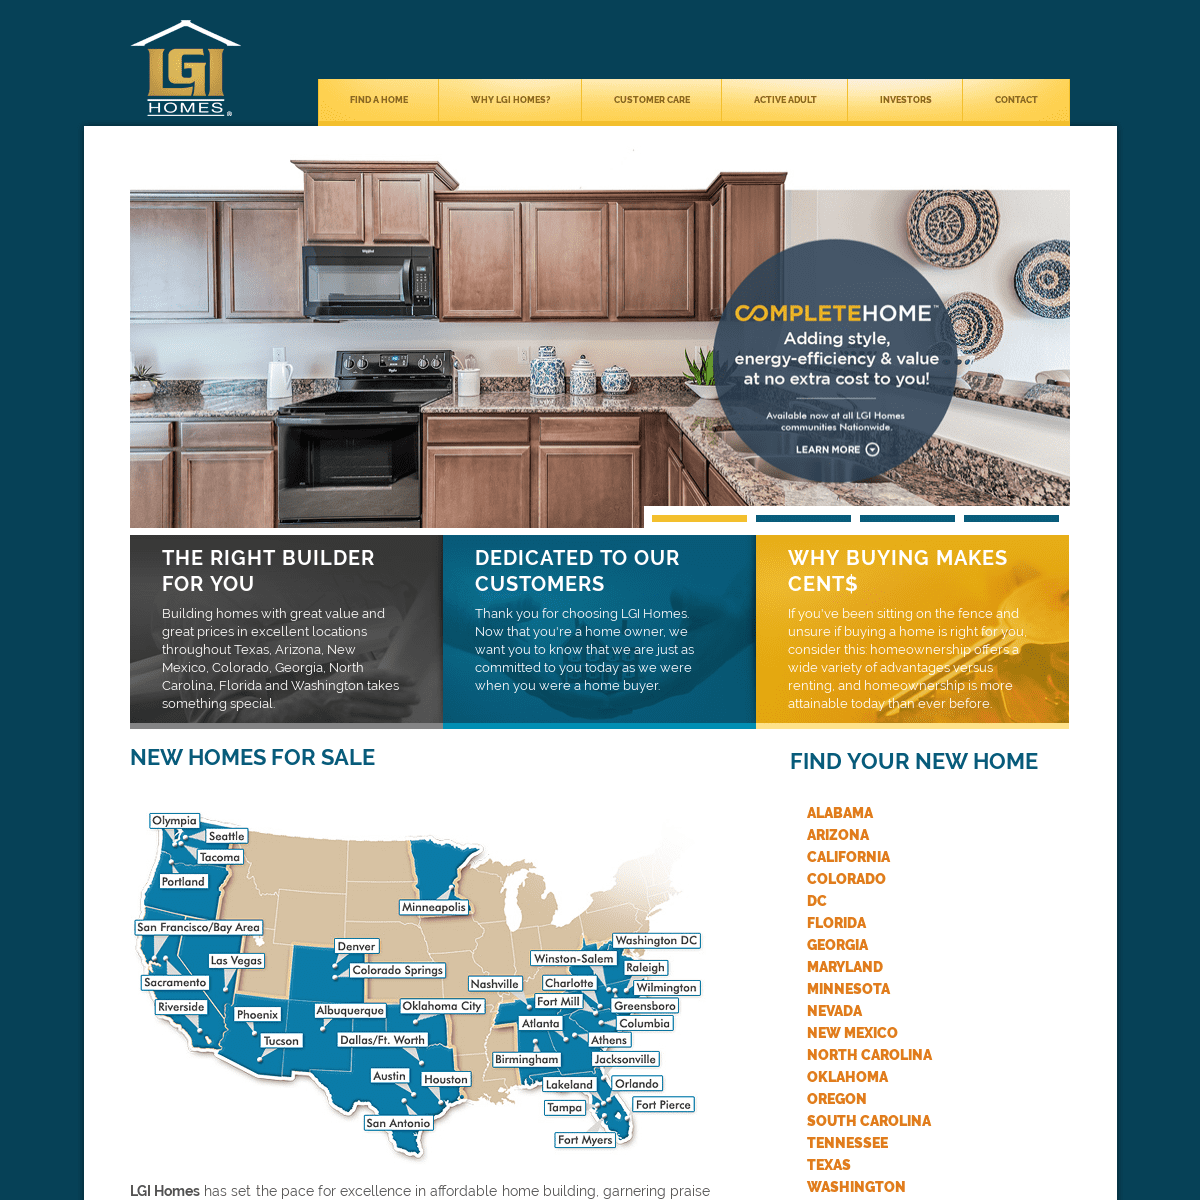 Home Builder with Affordable New Homes in AZ, FL, GA, NM & TX | LGI Homes